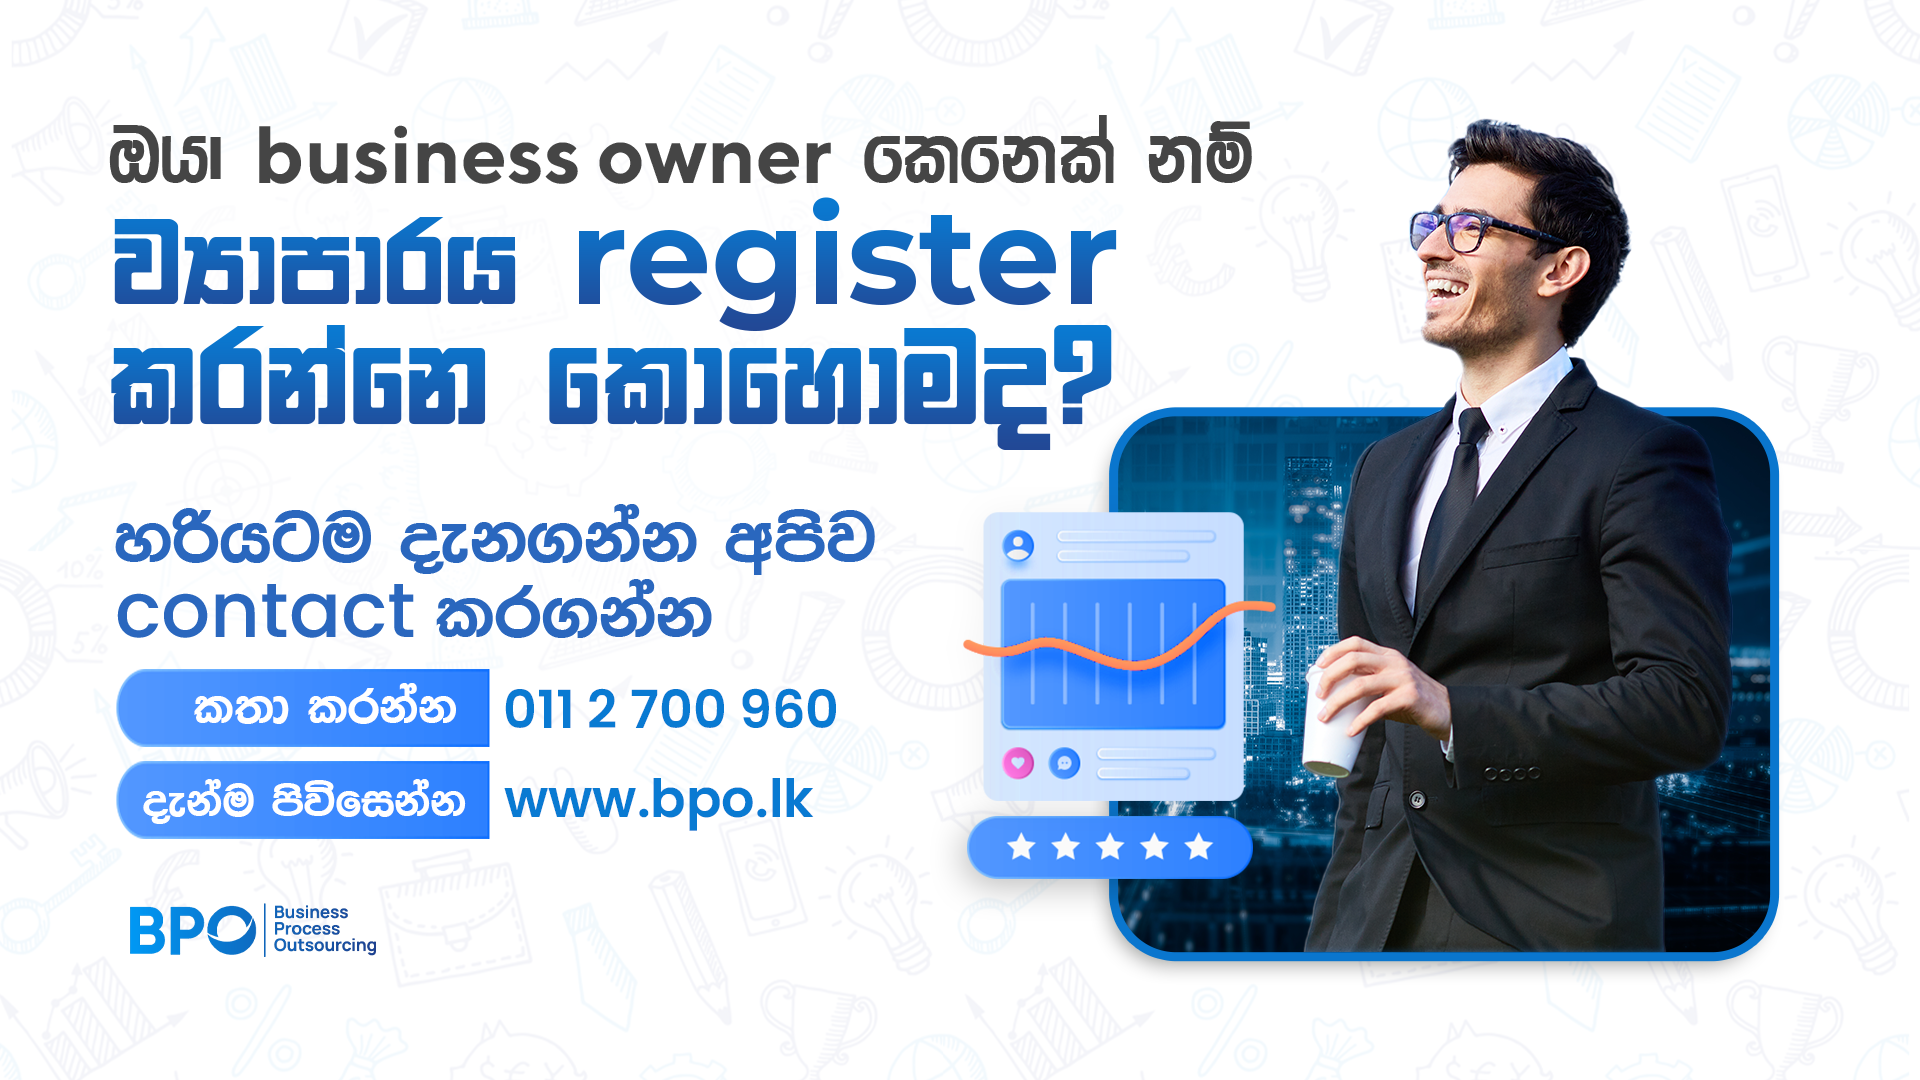 latest business ideas in sri lanka